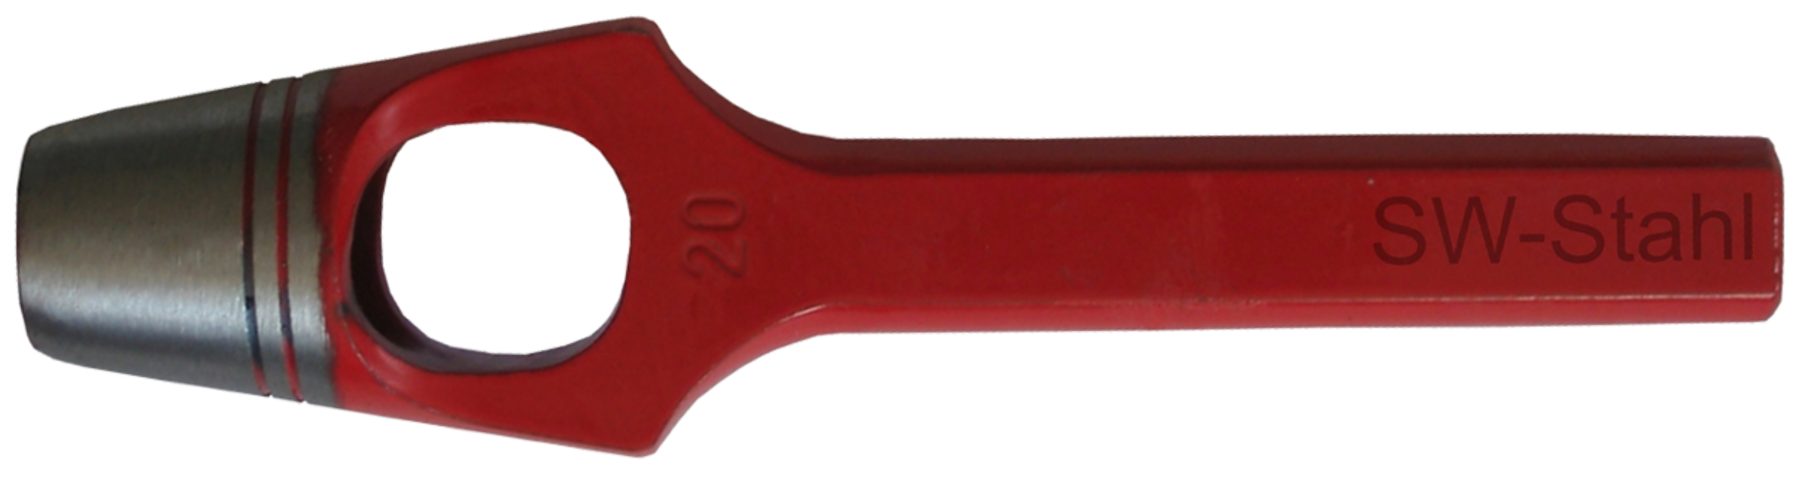 SW-STAHL Multitool 95009L Henkellocheisen ø 9 mm, rot lackiert, geschliffen | Multitools